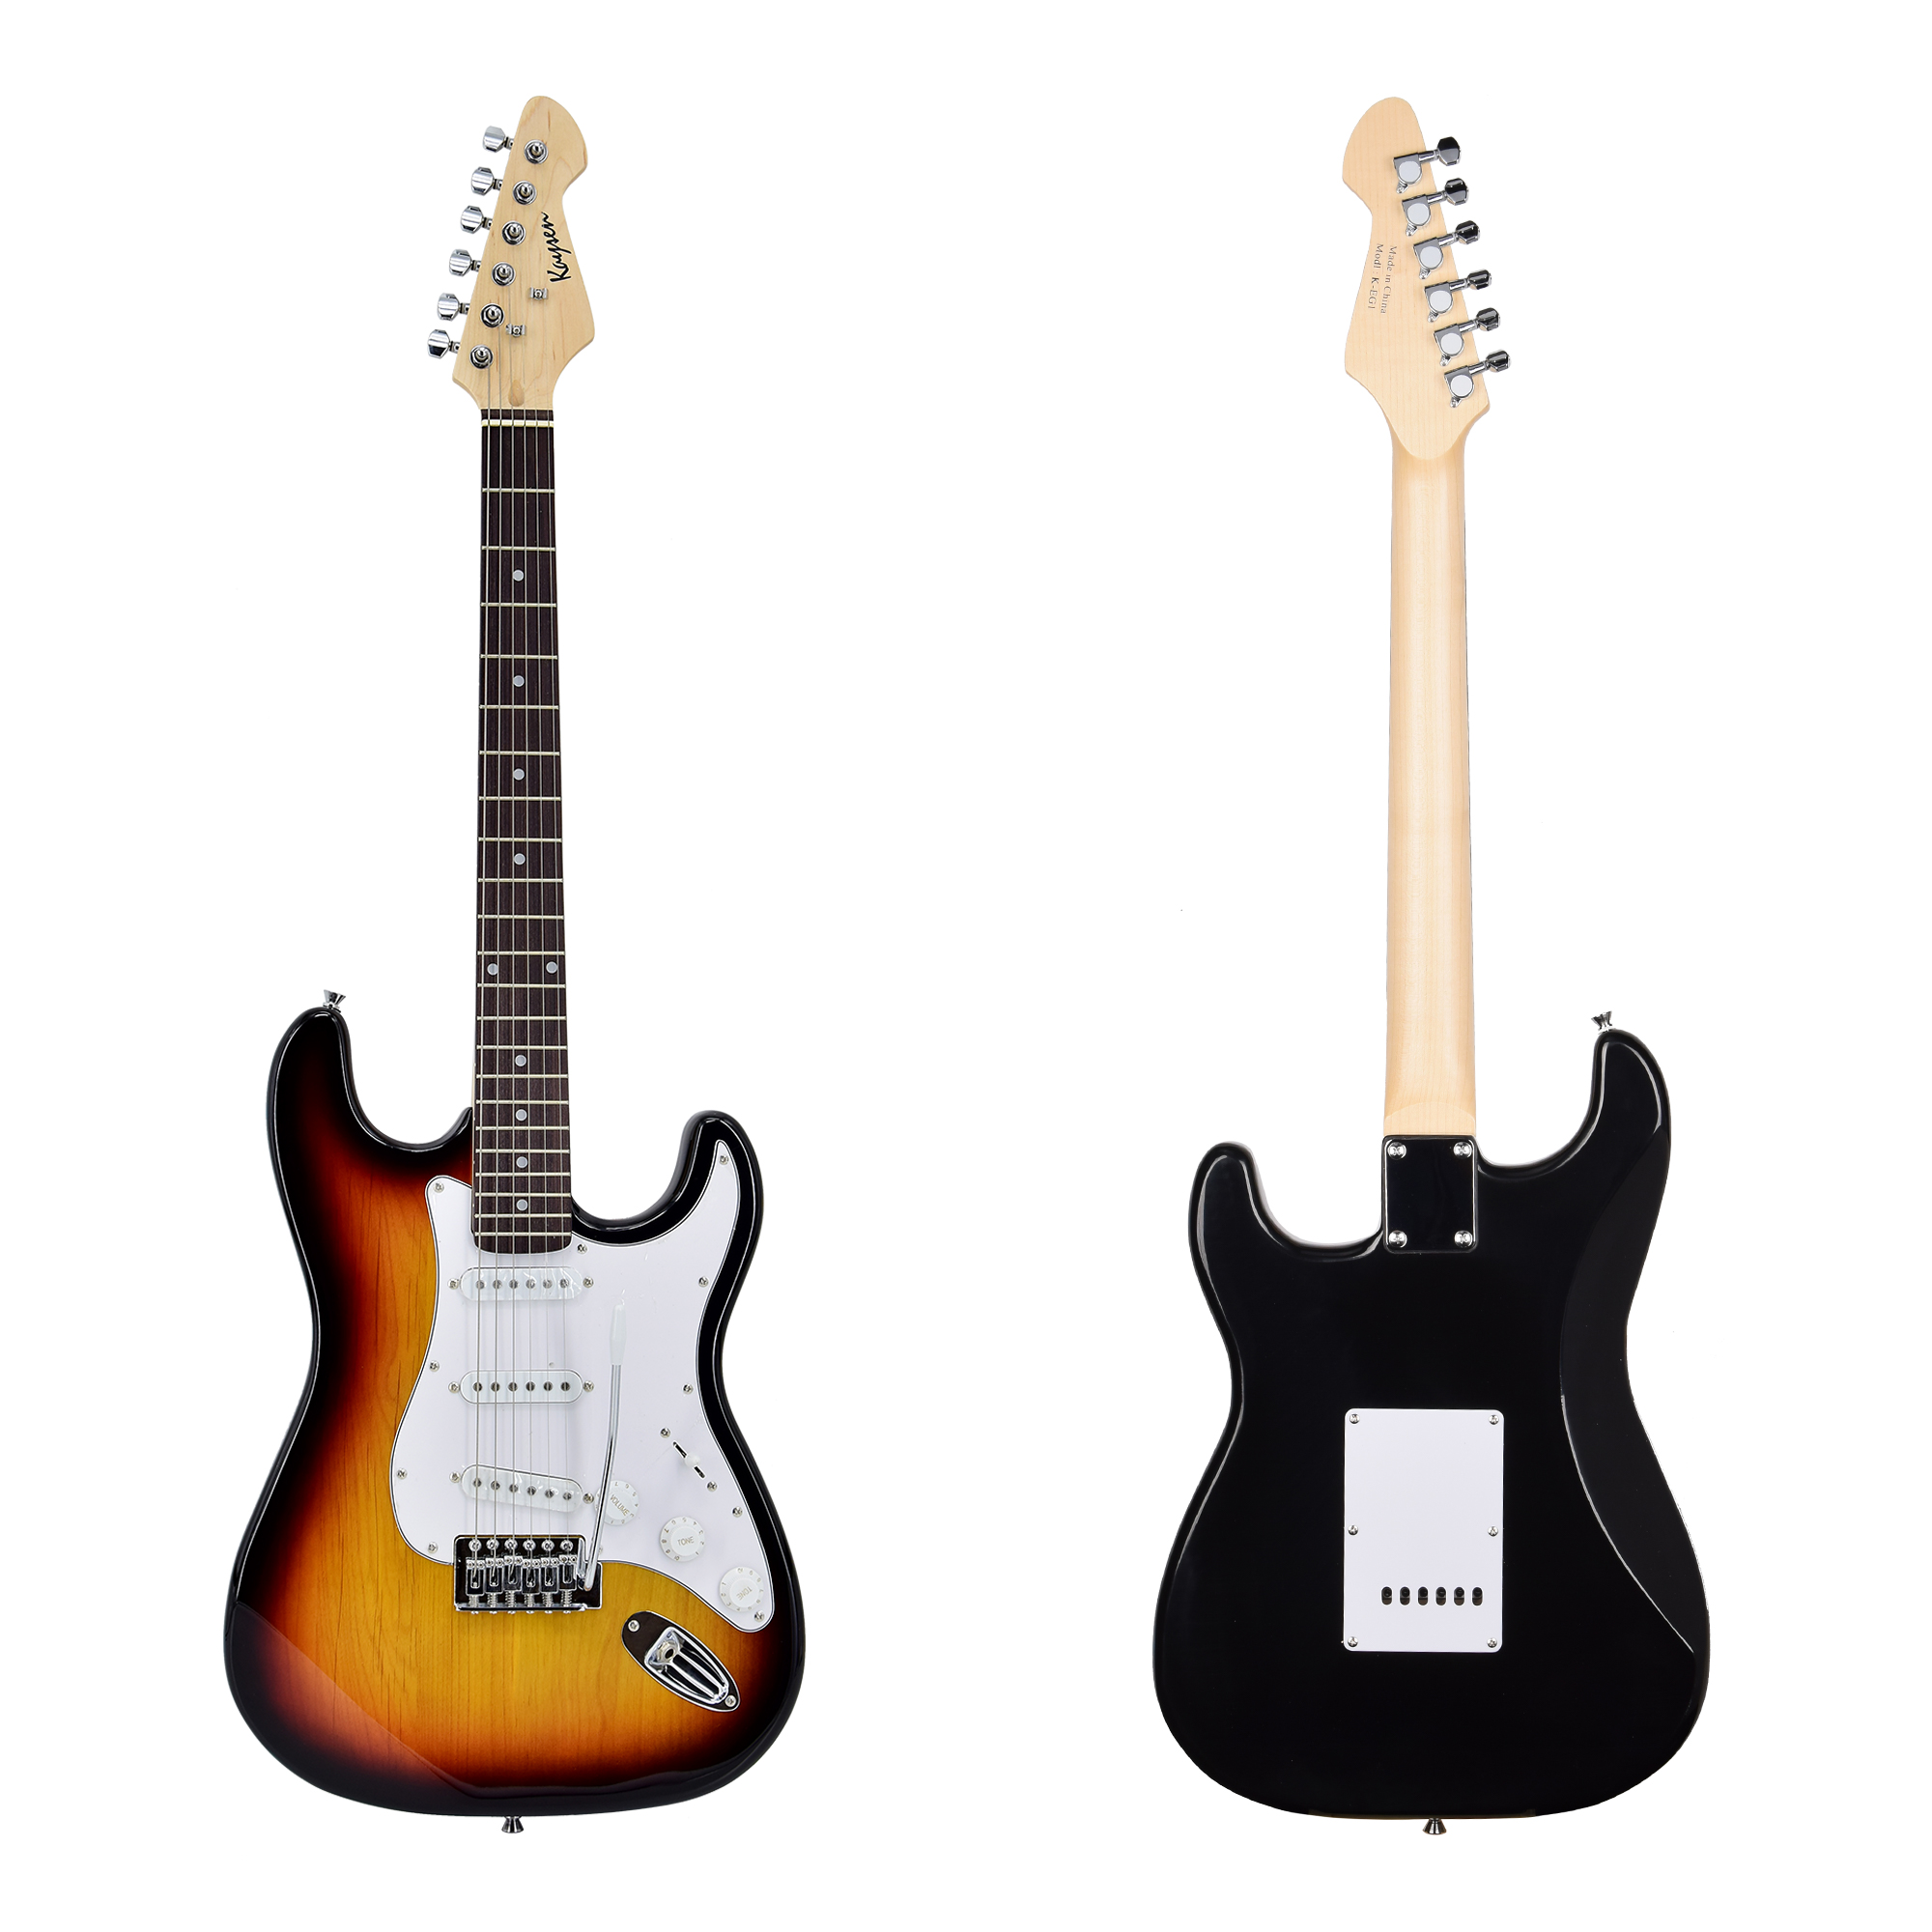 EG1 -2 electric guitar kit